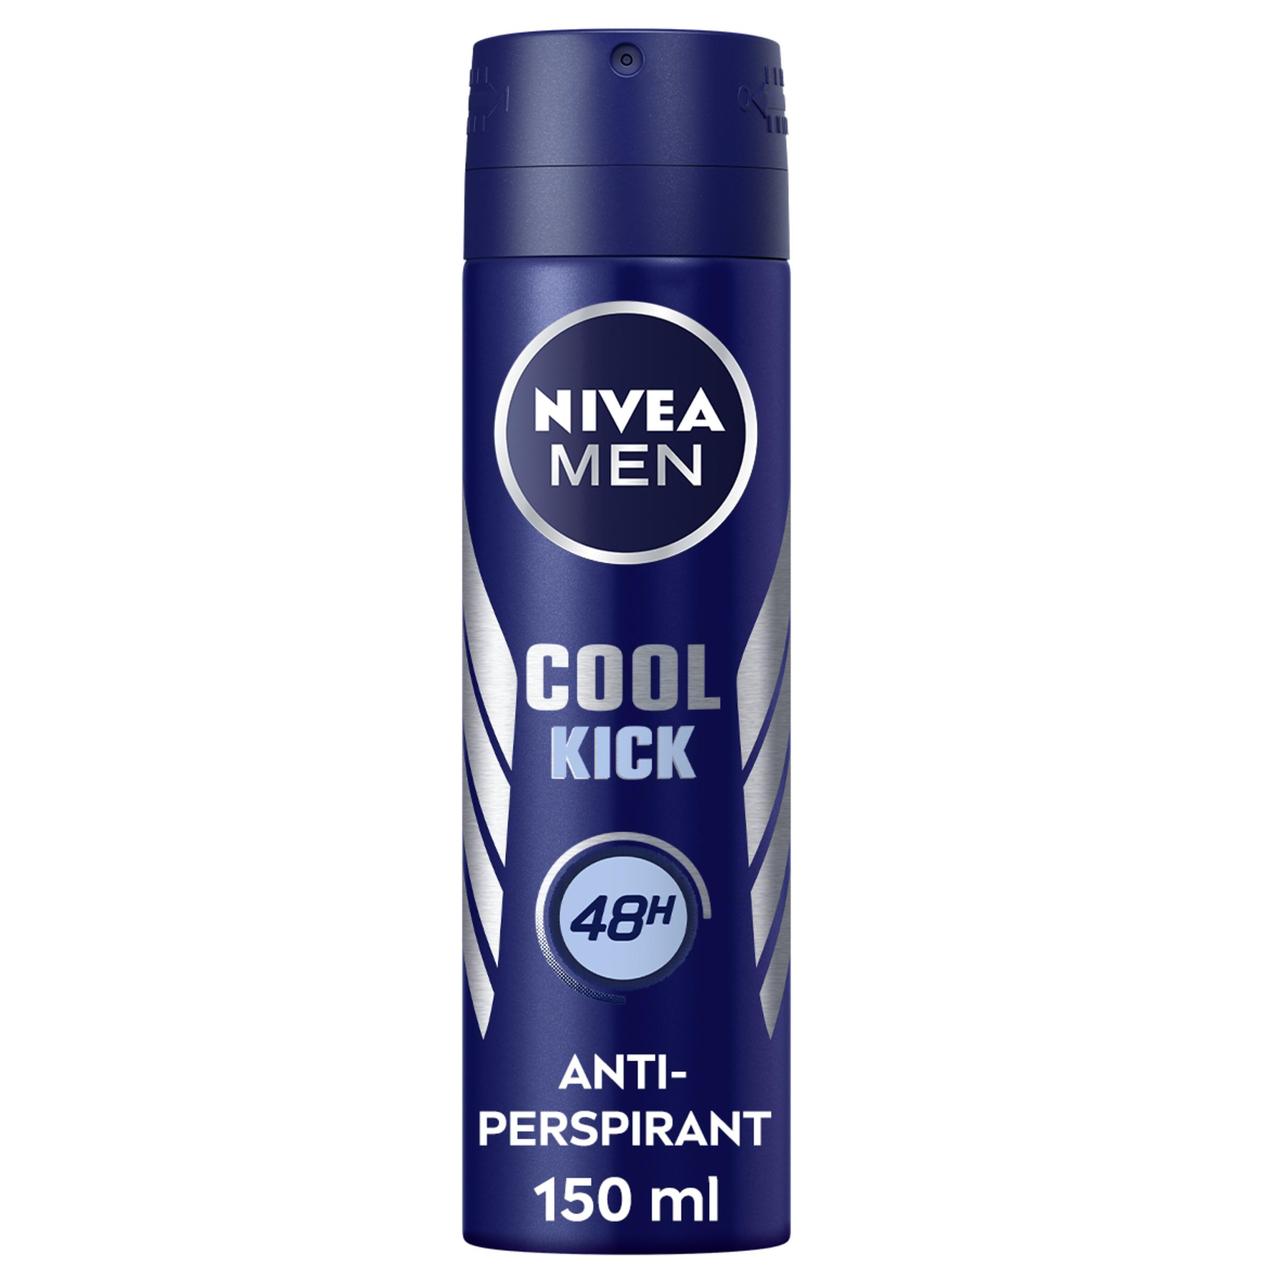 NIVEA Men Cool Kick Anti-perspirant Deodorant Spray